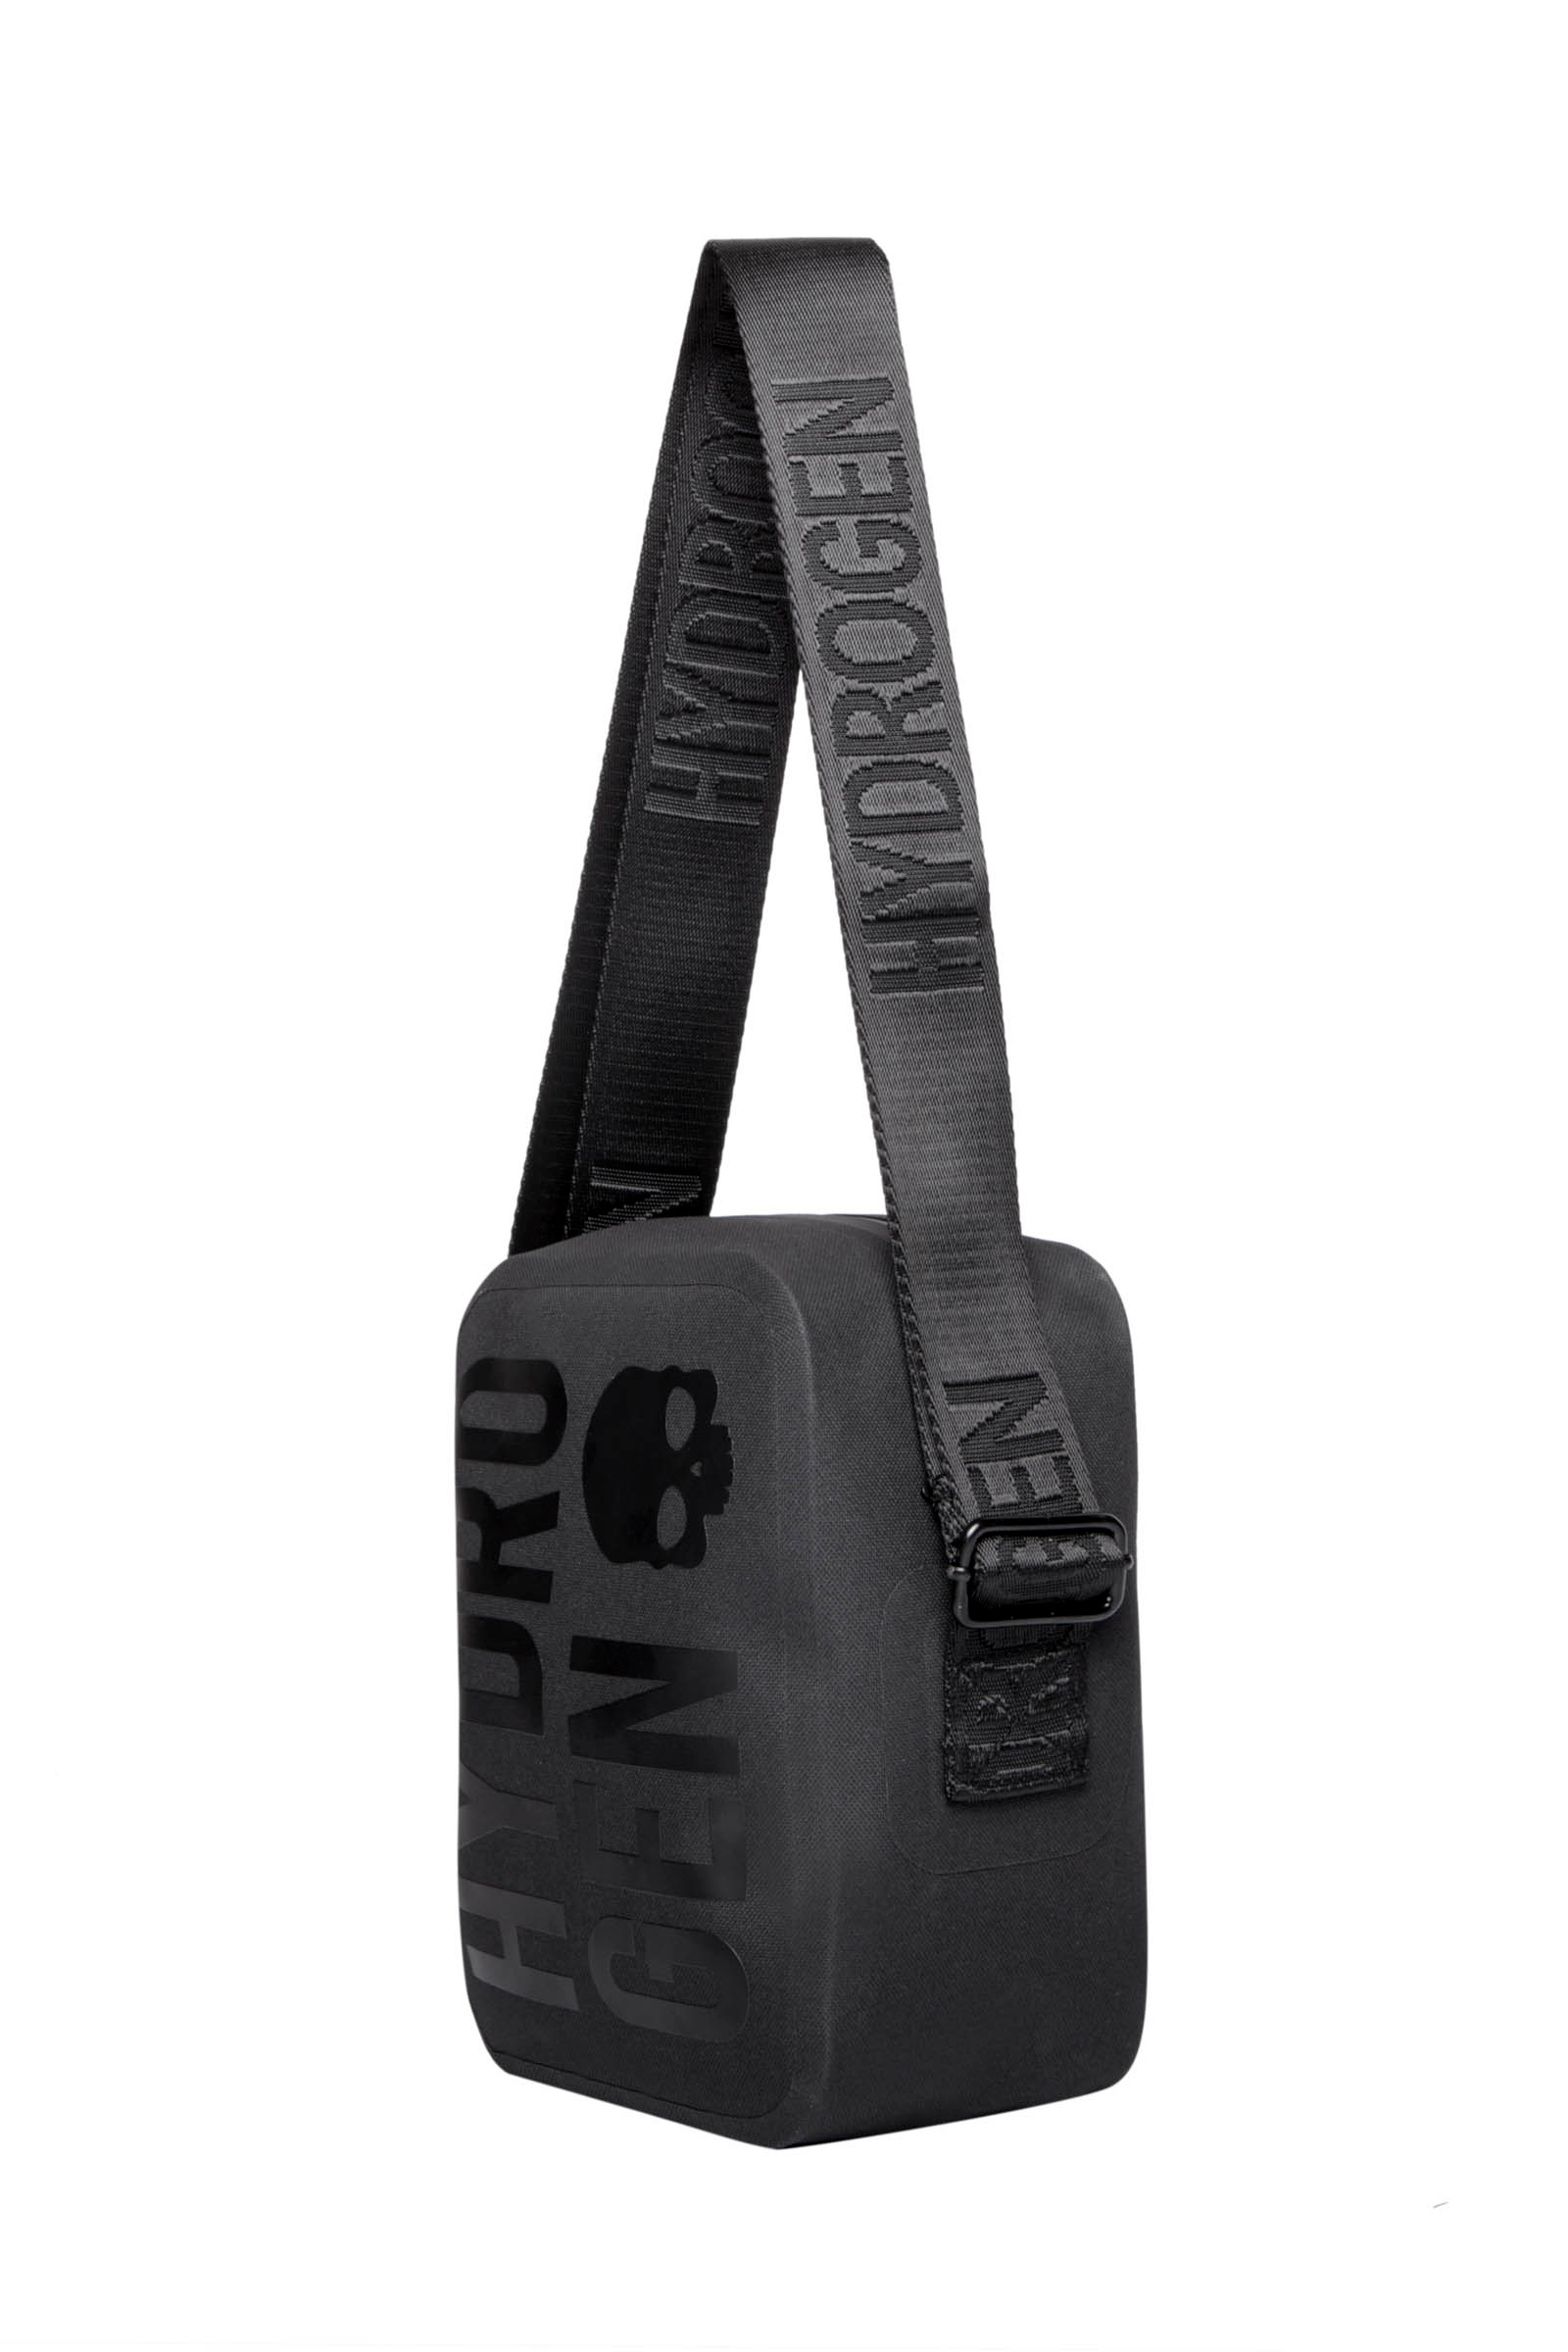 SHOULDER BAG - BLACK - Abbigliamento sportivo | Hydrogen